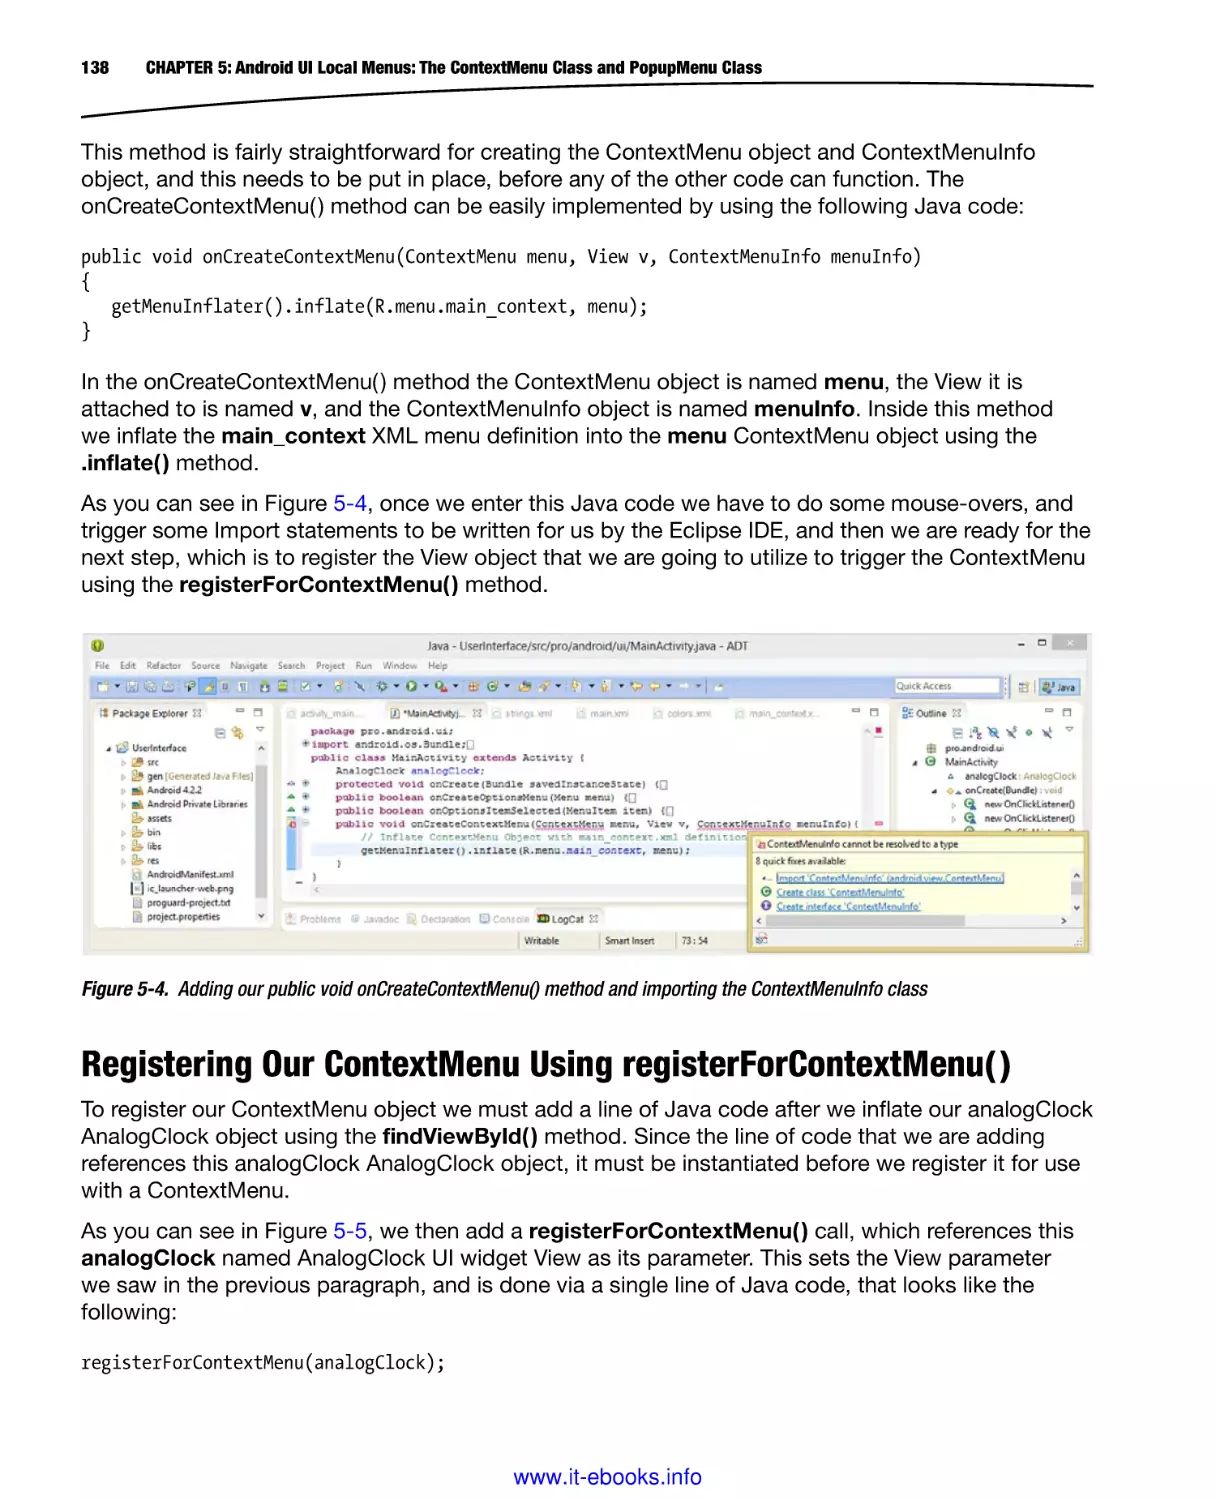 Registering Our ContextMenu Using registerForContextMenu( )